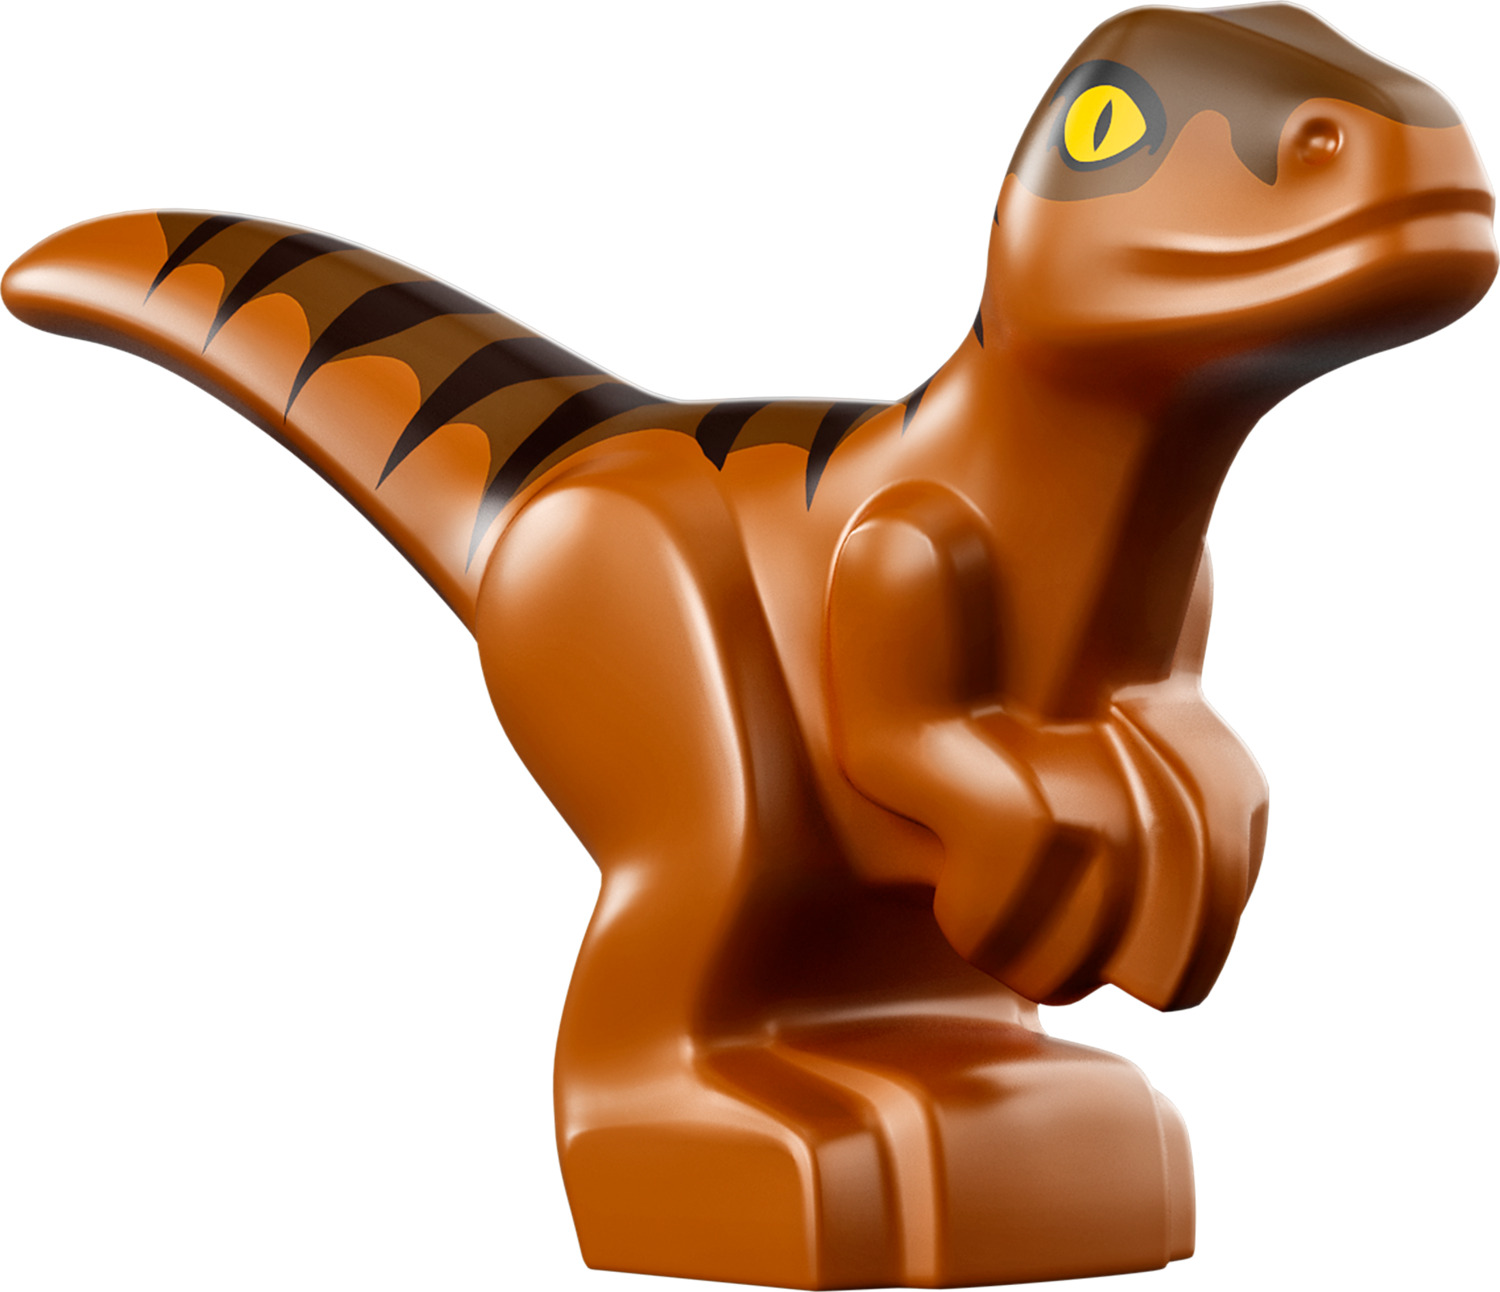 Lego 76942 Jurassic World:Baryonyx Dinosaur Boat Escape